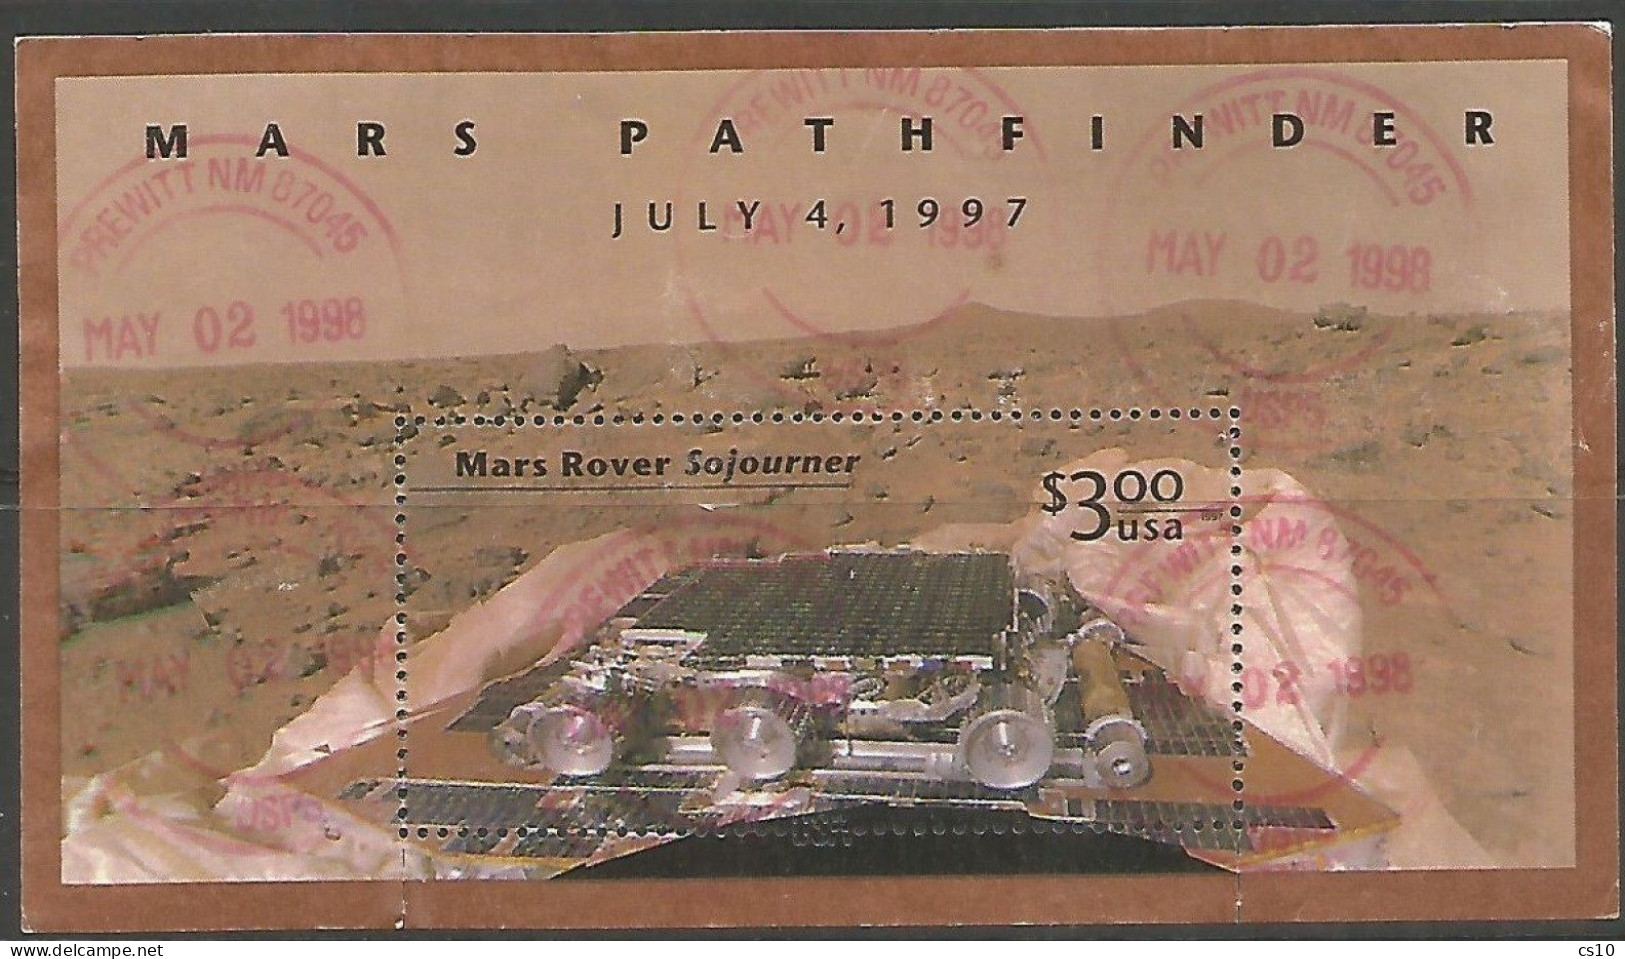 USA 1997 Mars Pathfinder SC.# 3178 S/S Postally Used (1998) Postally Used - VFU Condition - Verenigde Staten